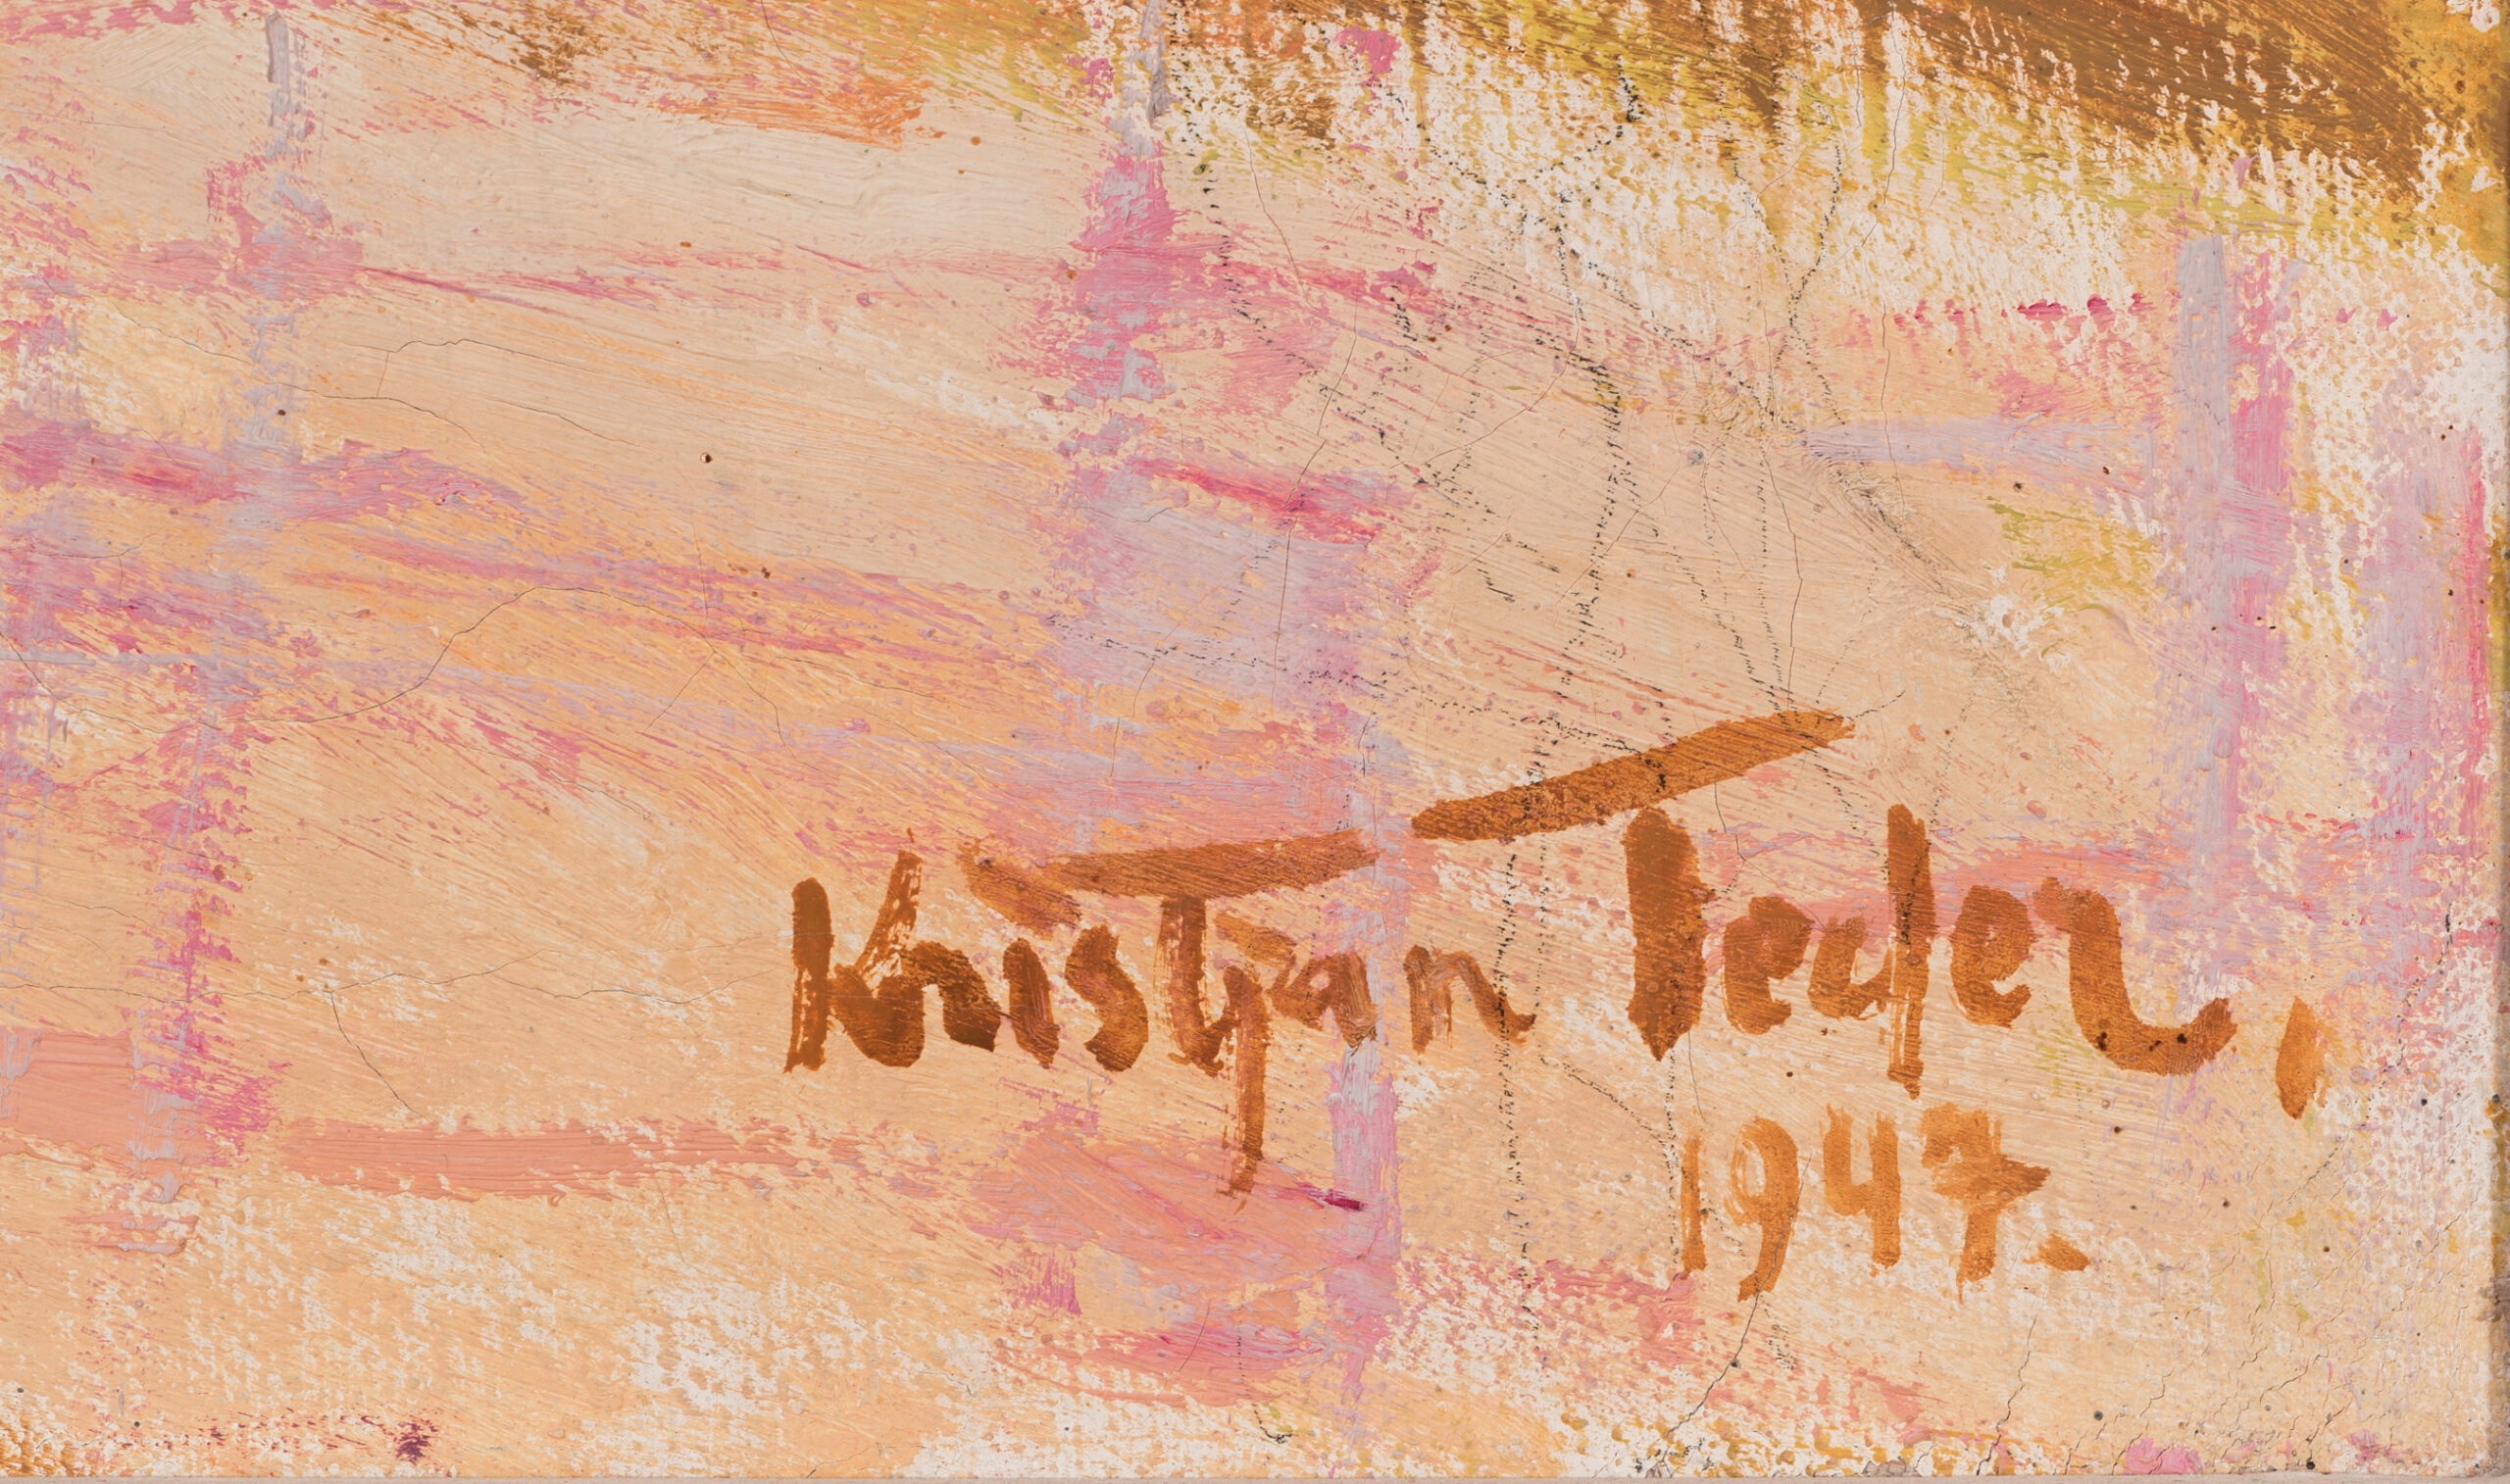 Kristjan Teder “Daaliad aknal”, 1947. 82,1 x 100,2 cm.